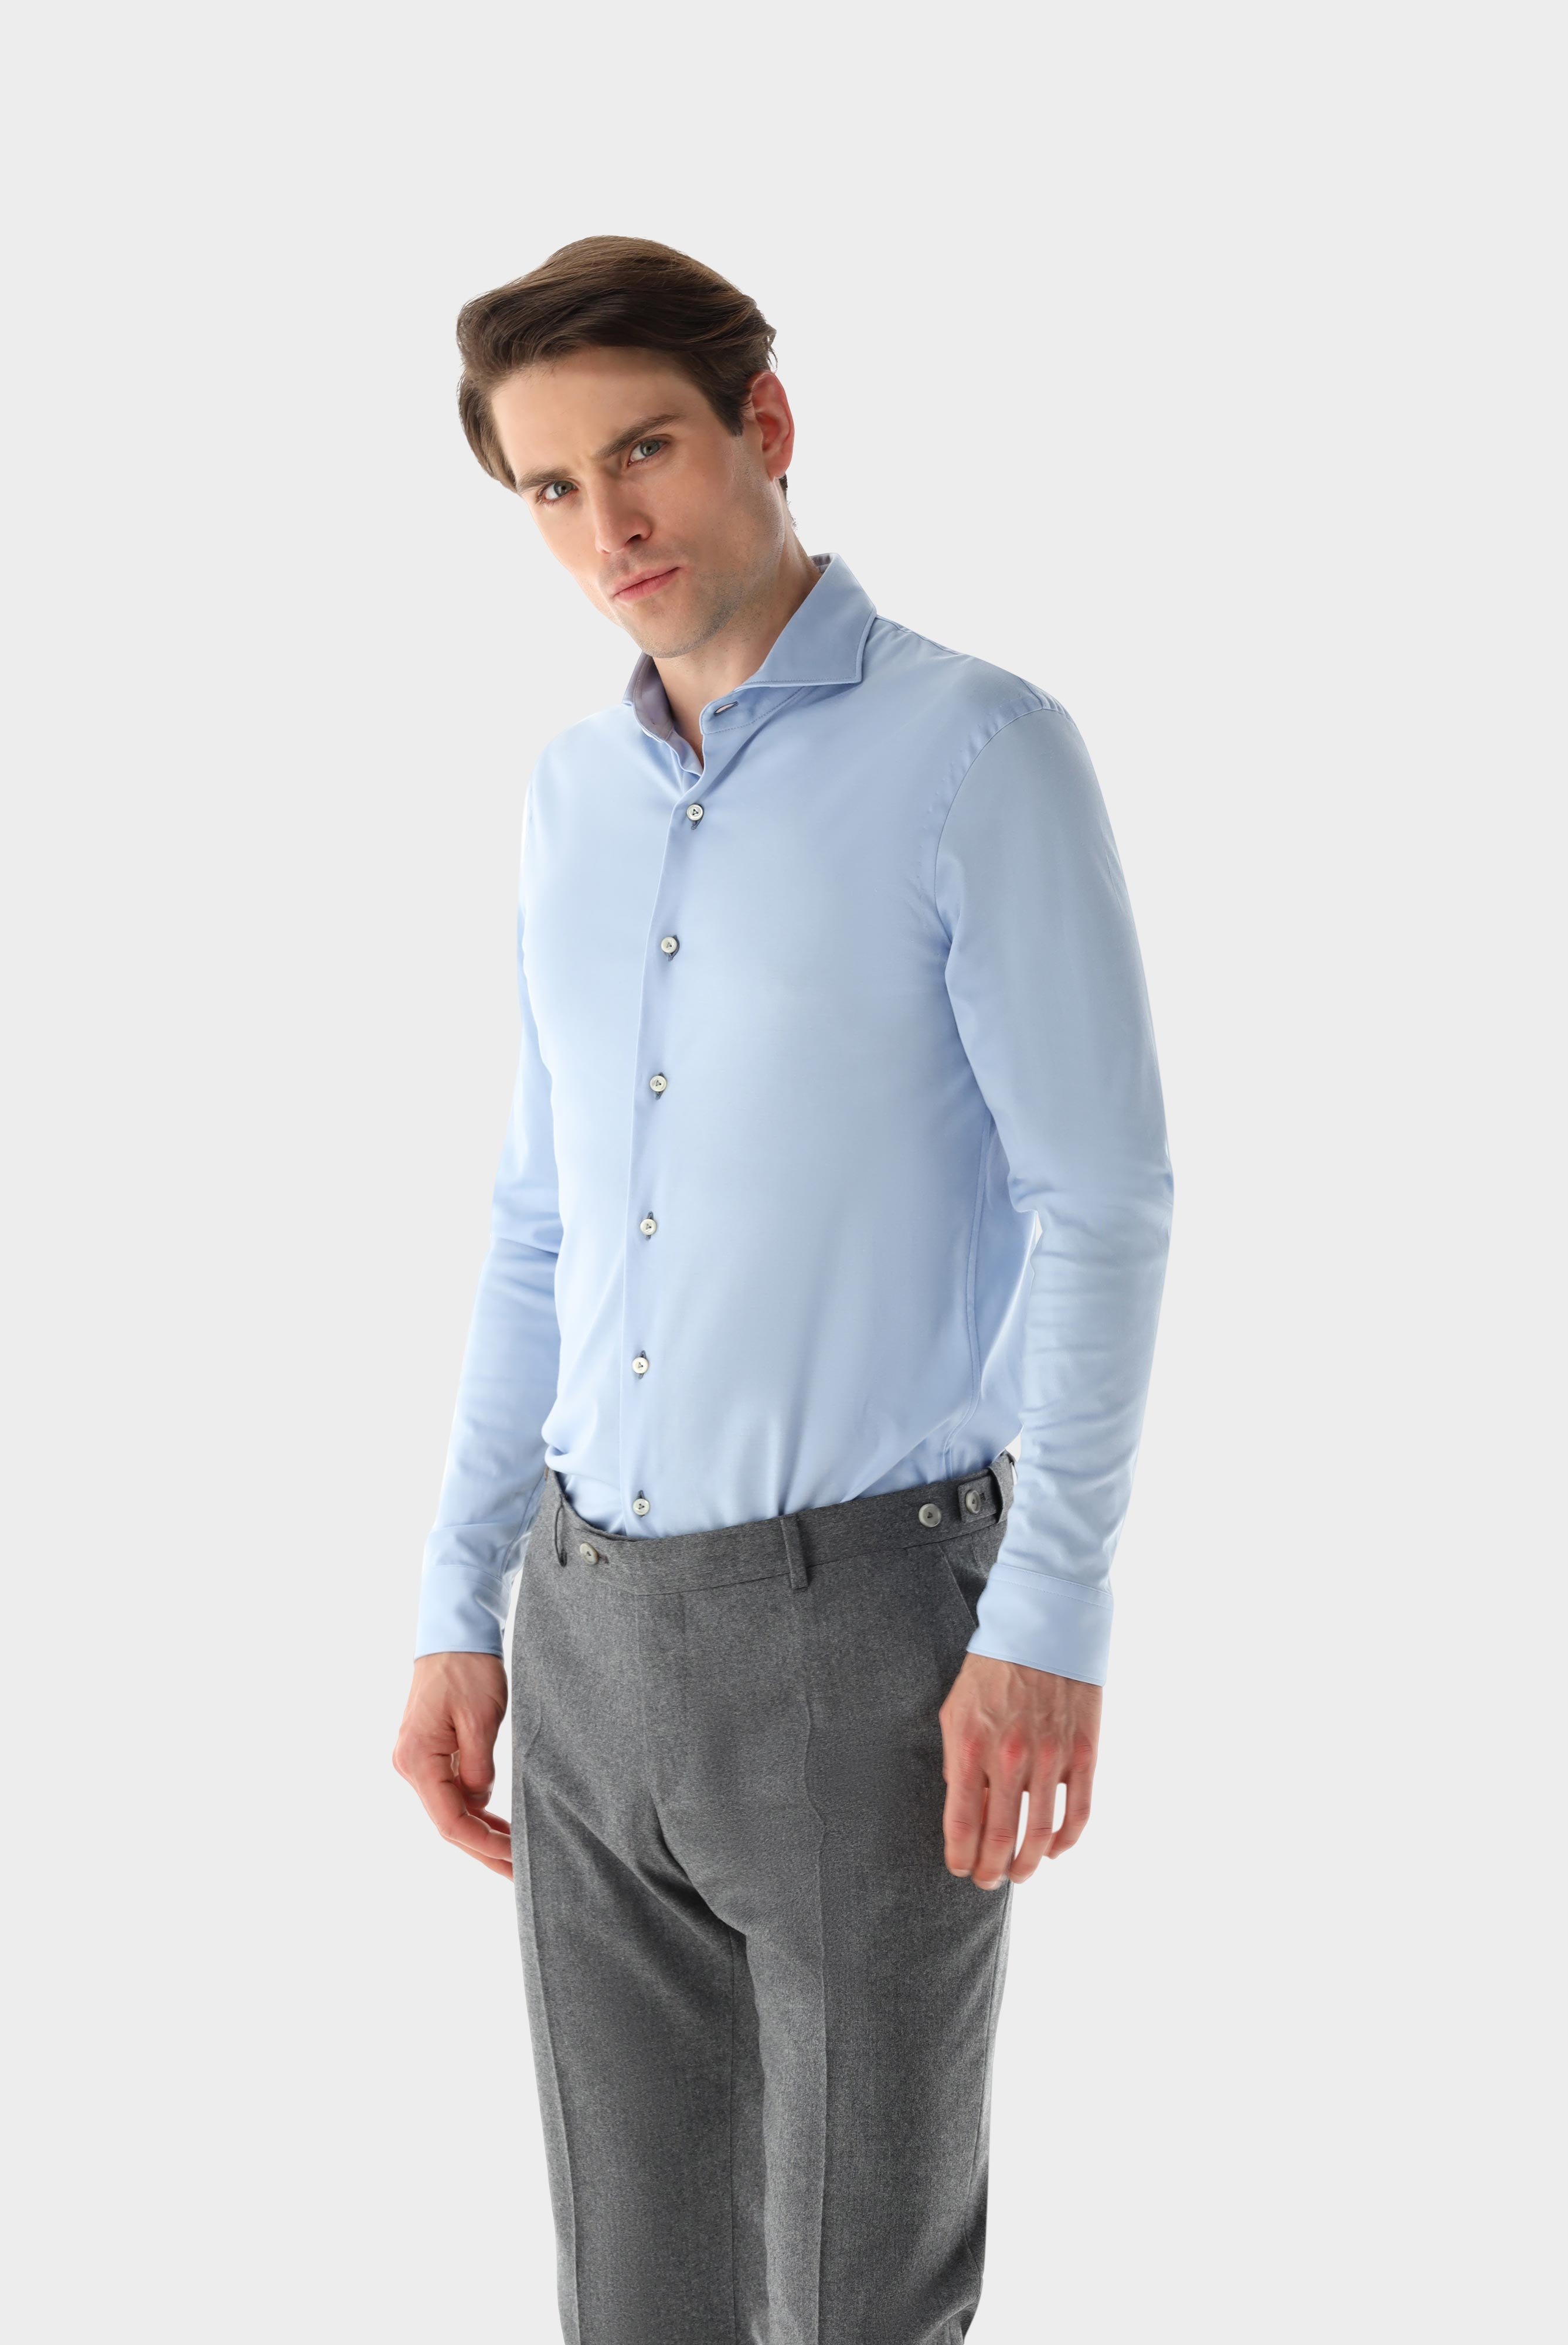 Casual Hemden+Jersey Hemd aus Schweizer Baumwolle Tailor Fit+20.1683.UC.180031.720.X3L